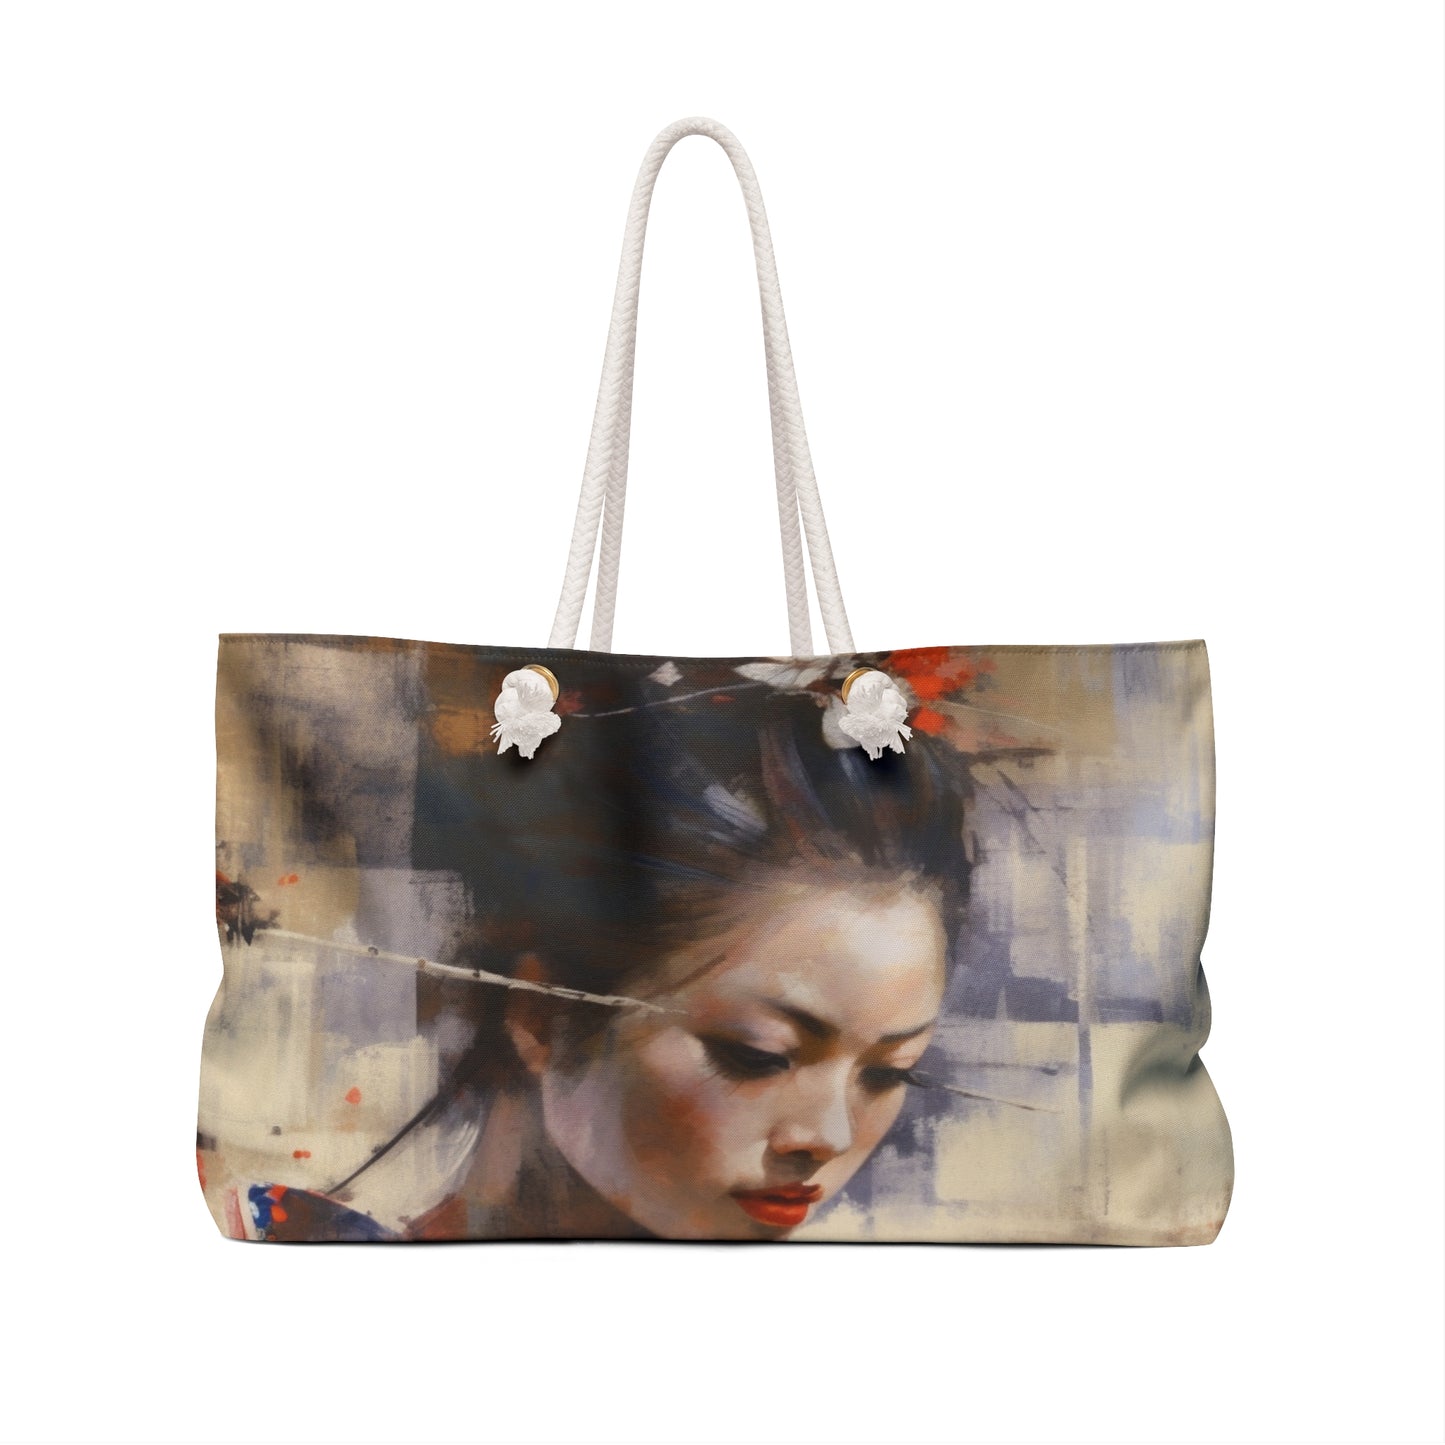 Japanese-Inspired Abstract Oil Painting Weekender Bag:Celebrating Geisha Beauty